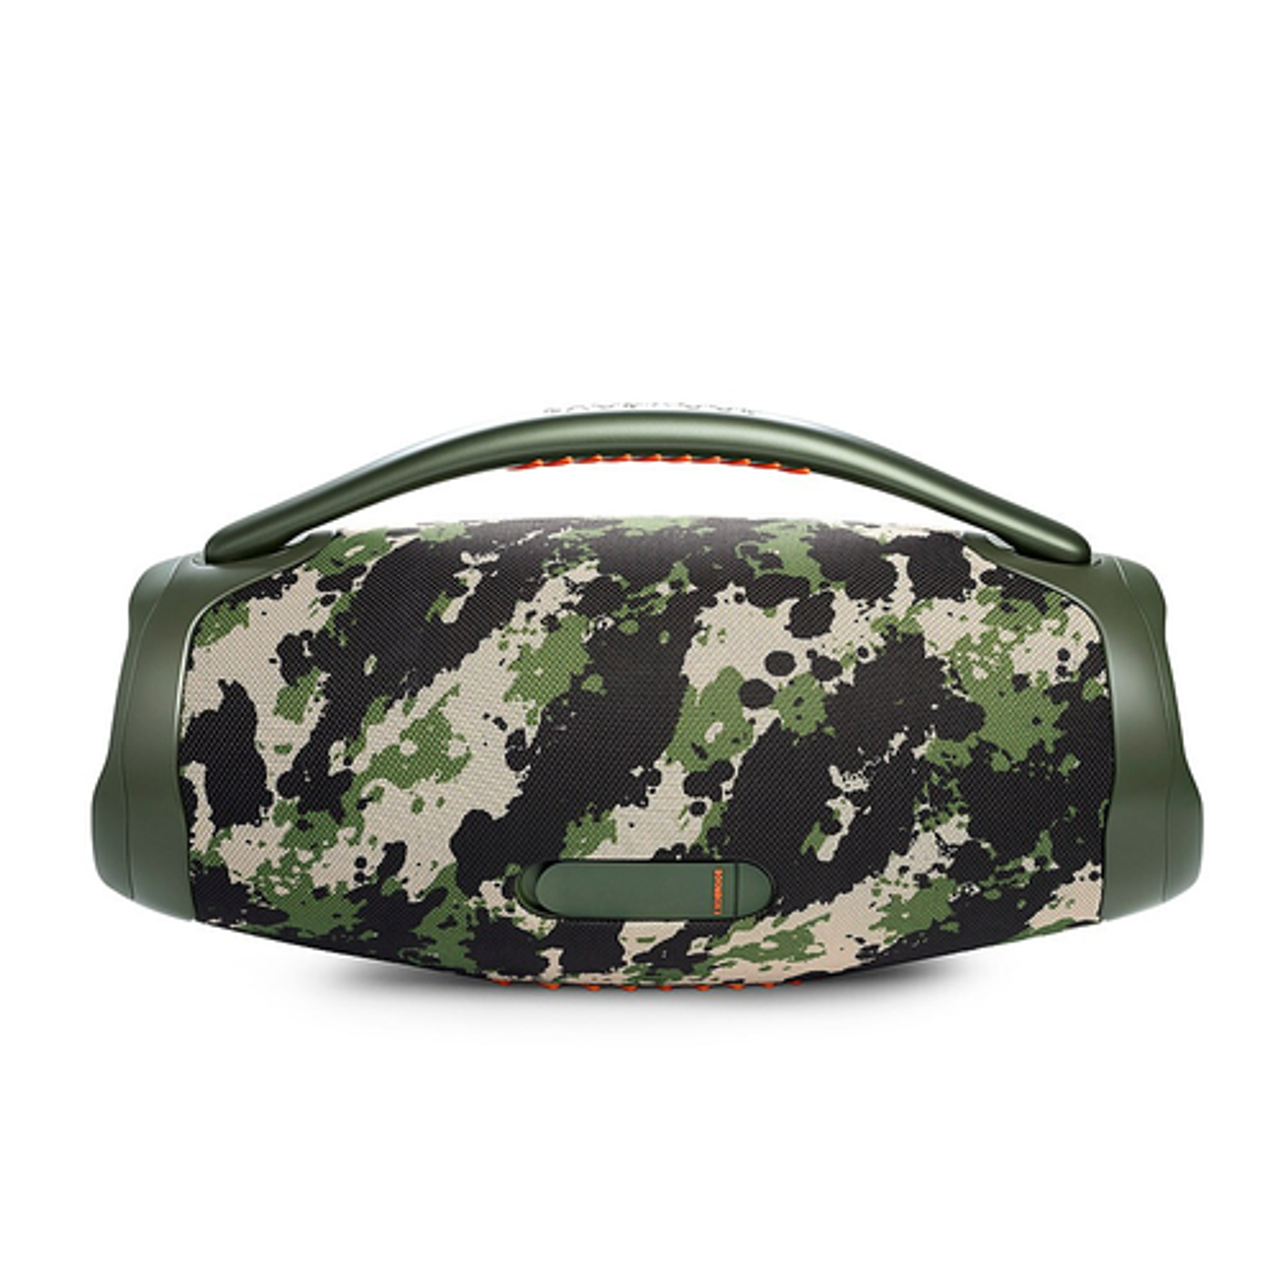 JBL - Boombox3 Portable Bluetooth Speaker - Camouflage